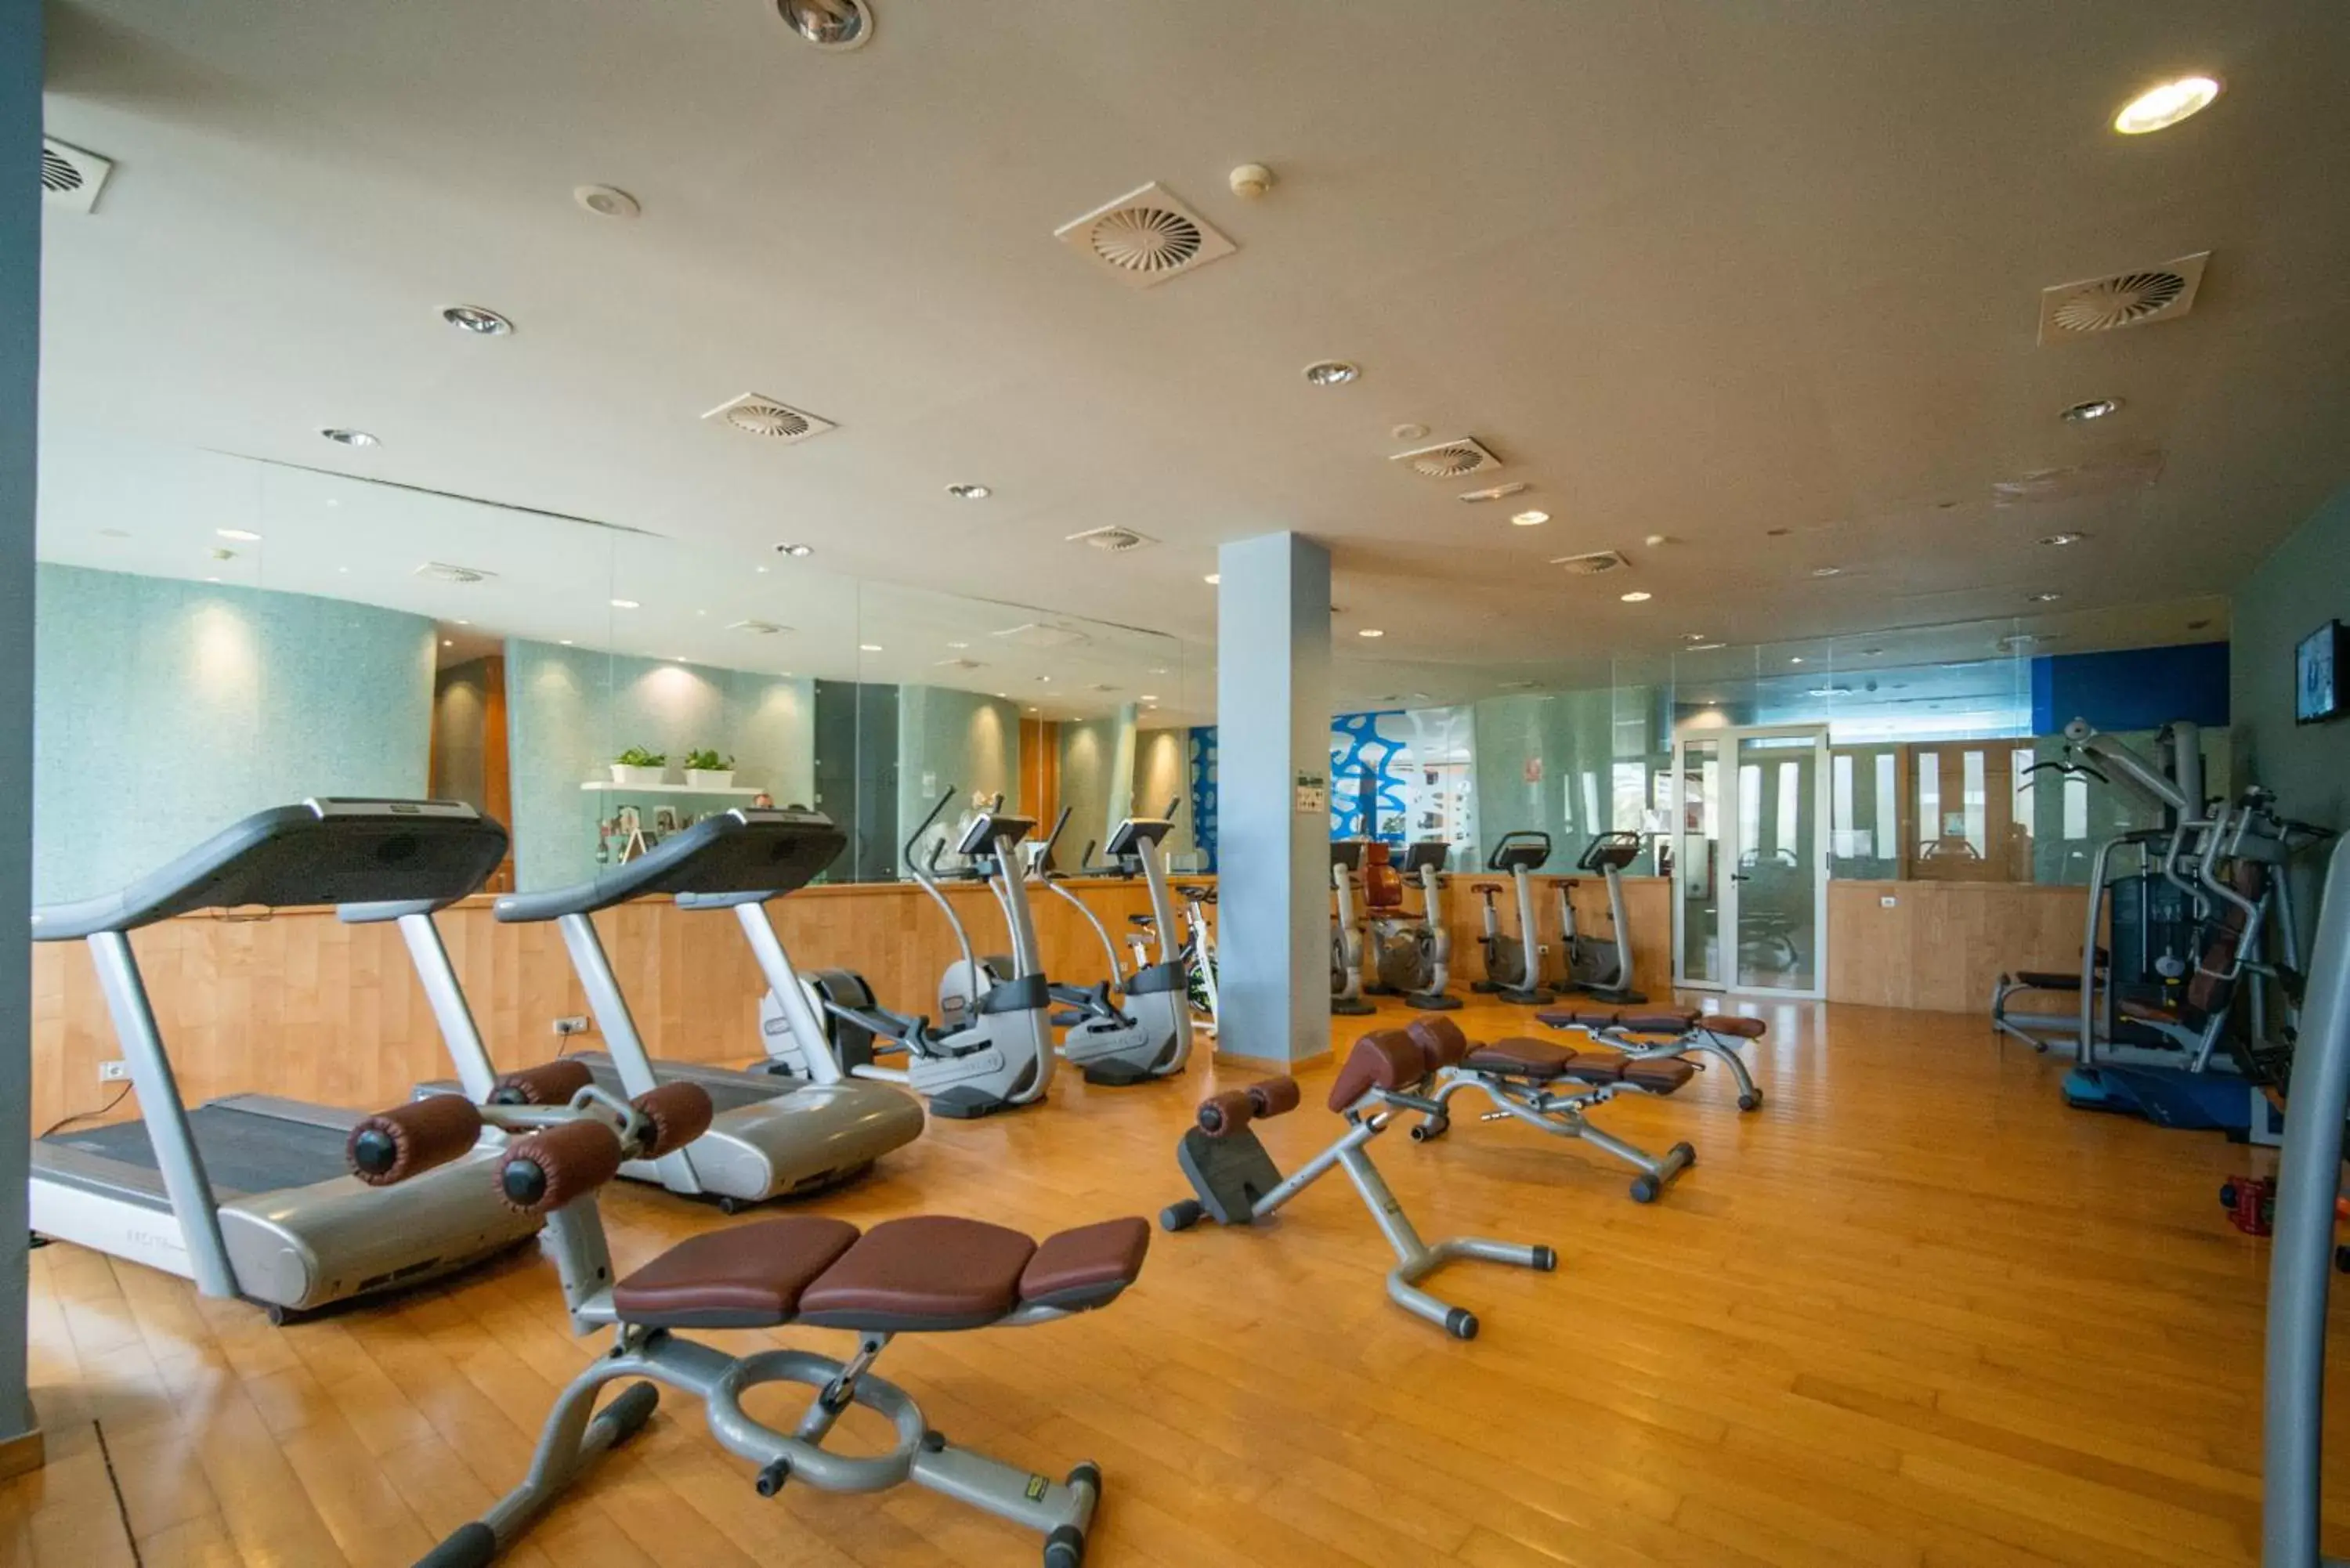 Fitness centre/facilities, Fitness Center/Facilities in Valle Del Este Golf Resort